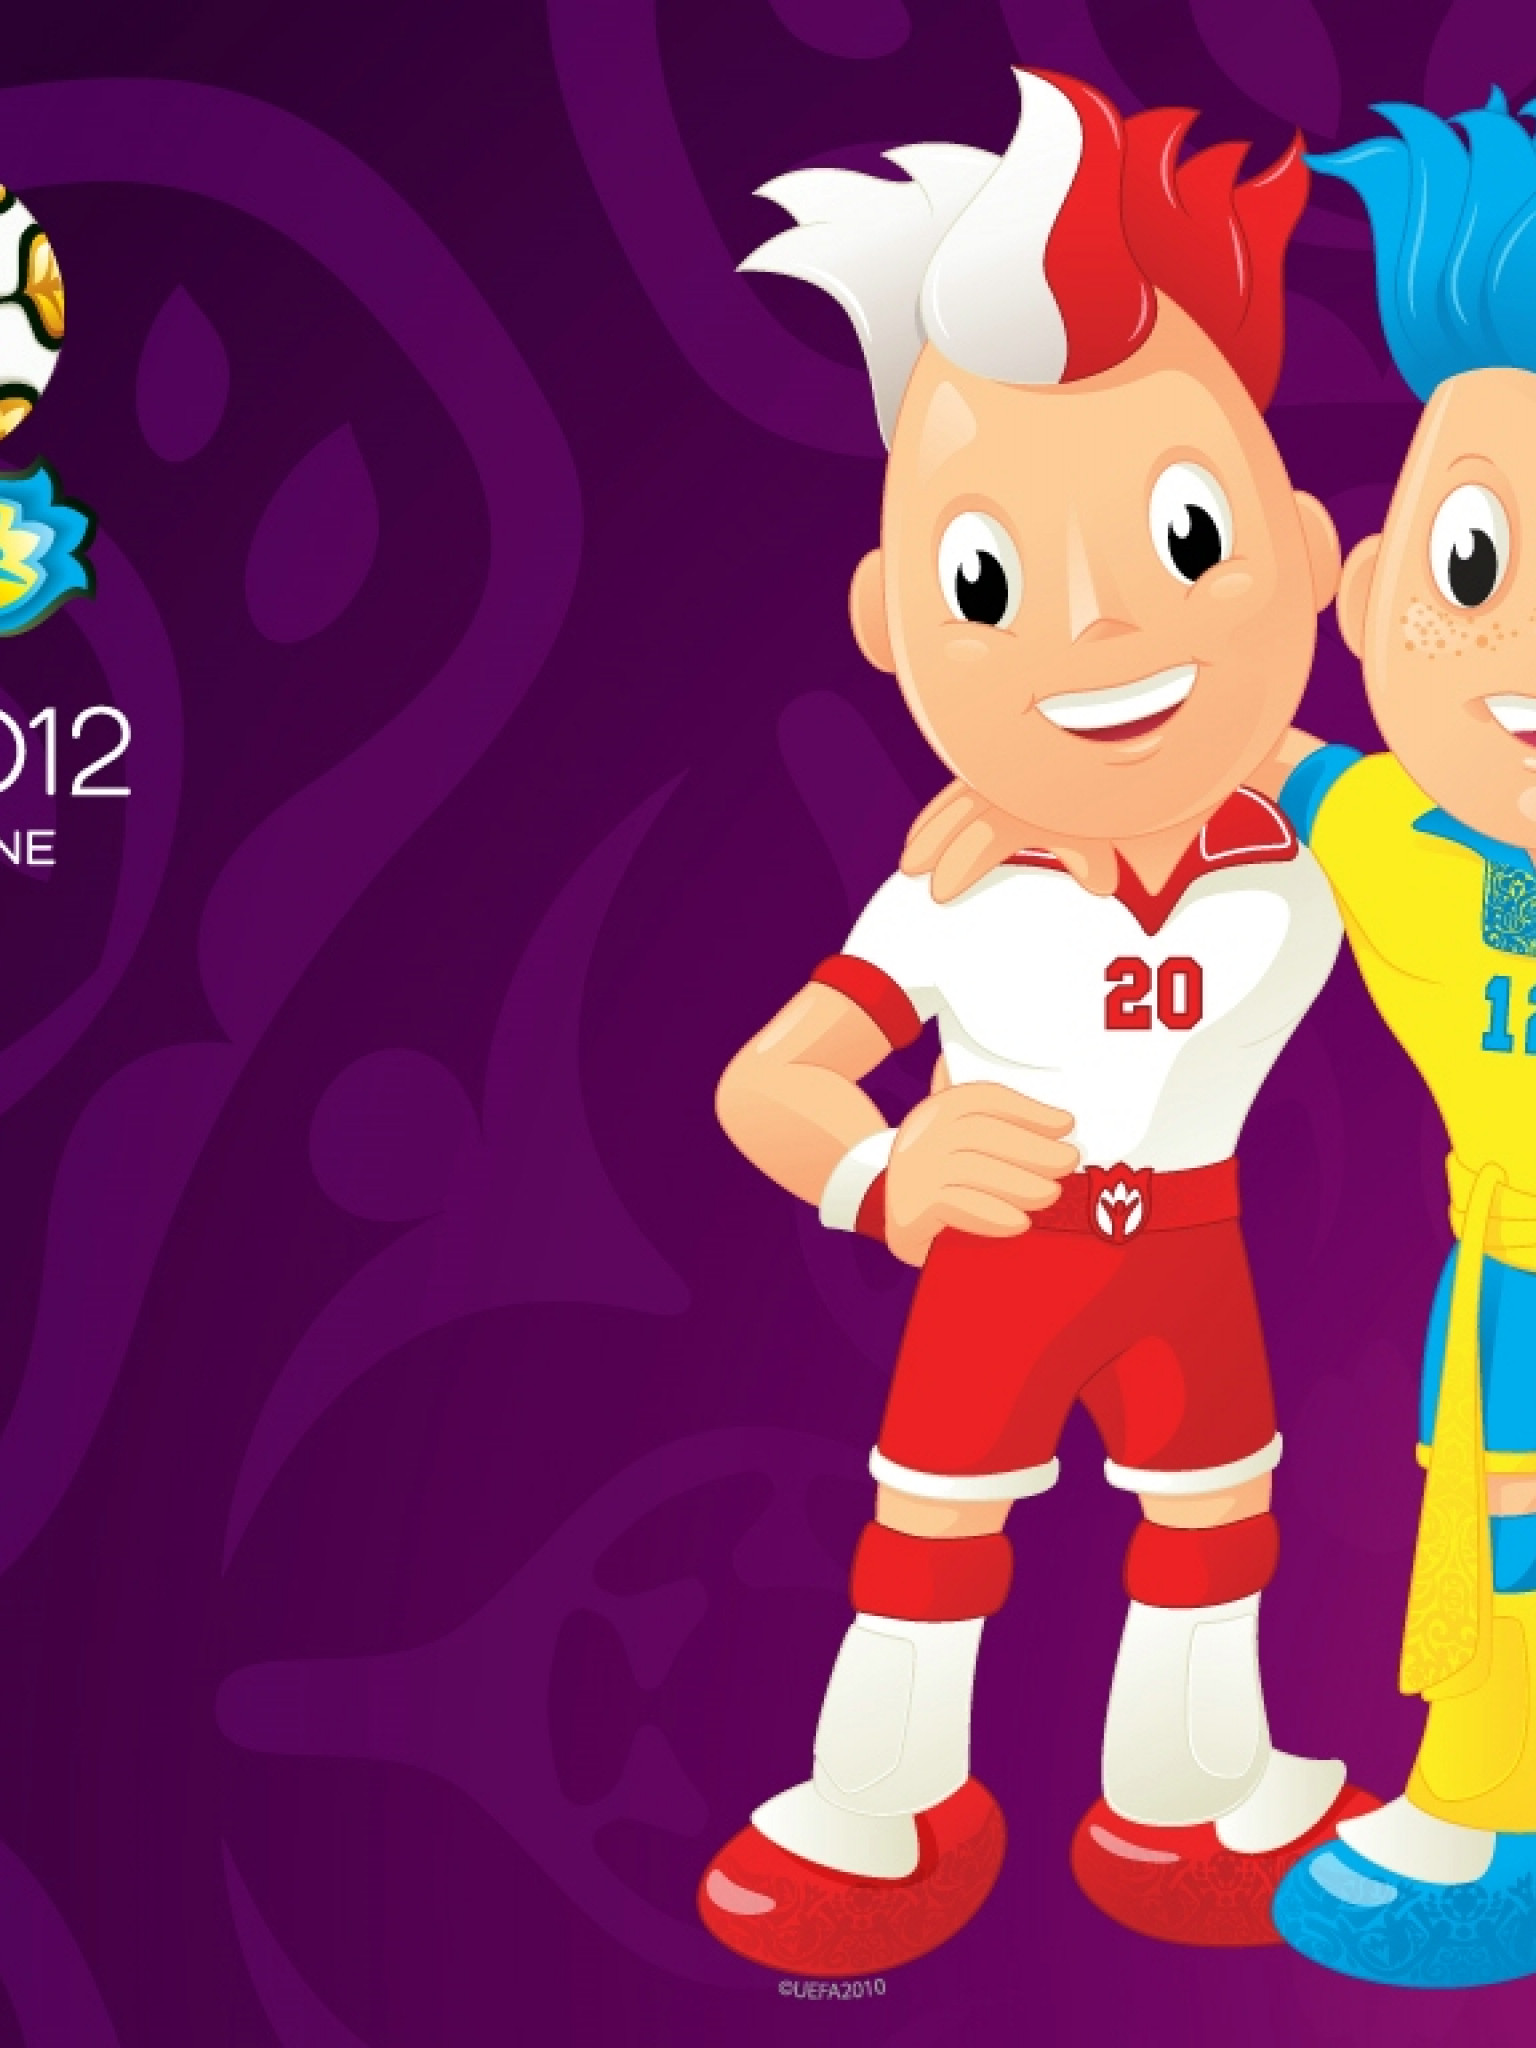 tapety-EURO-2012 (8).jpg